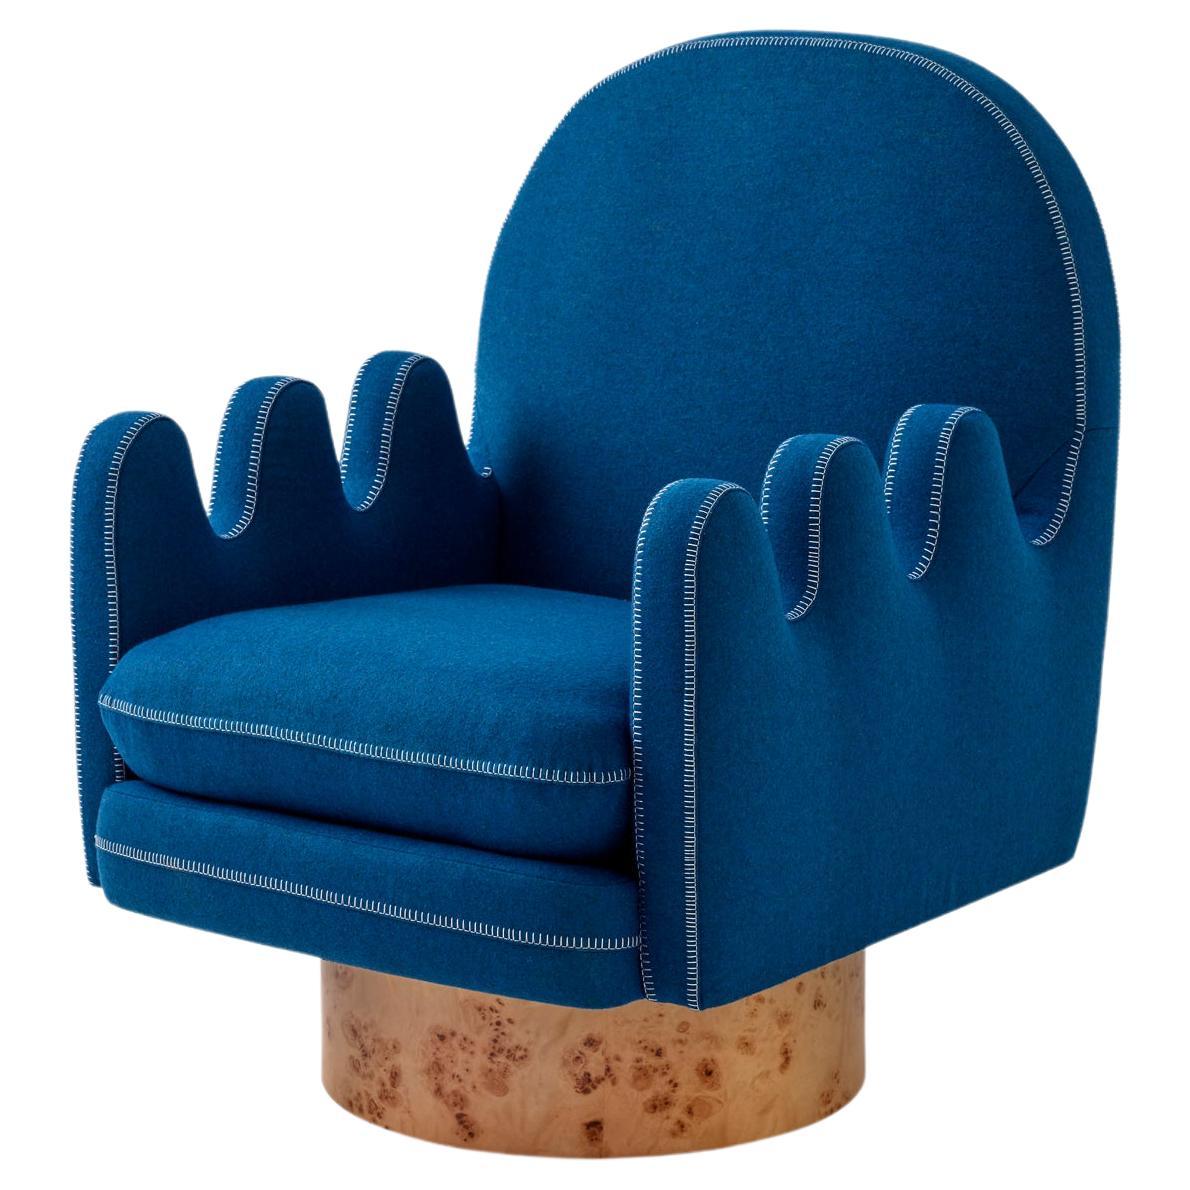 Semo-Sessel mit marineblauem Stoff und poliertem Wurzelholz